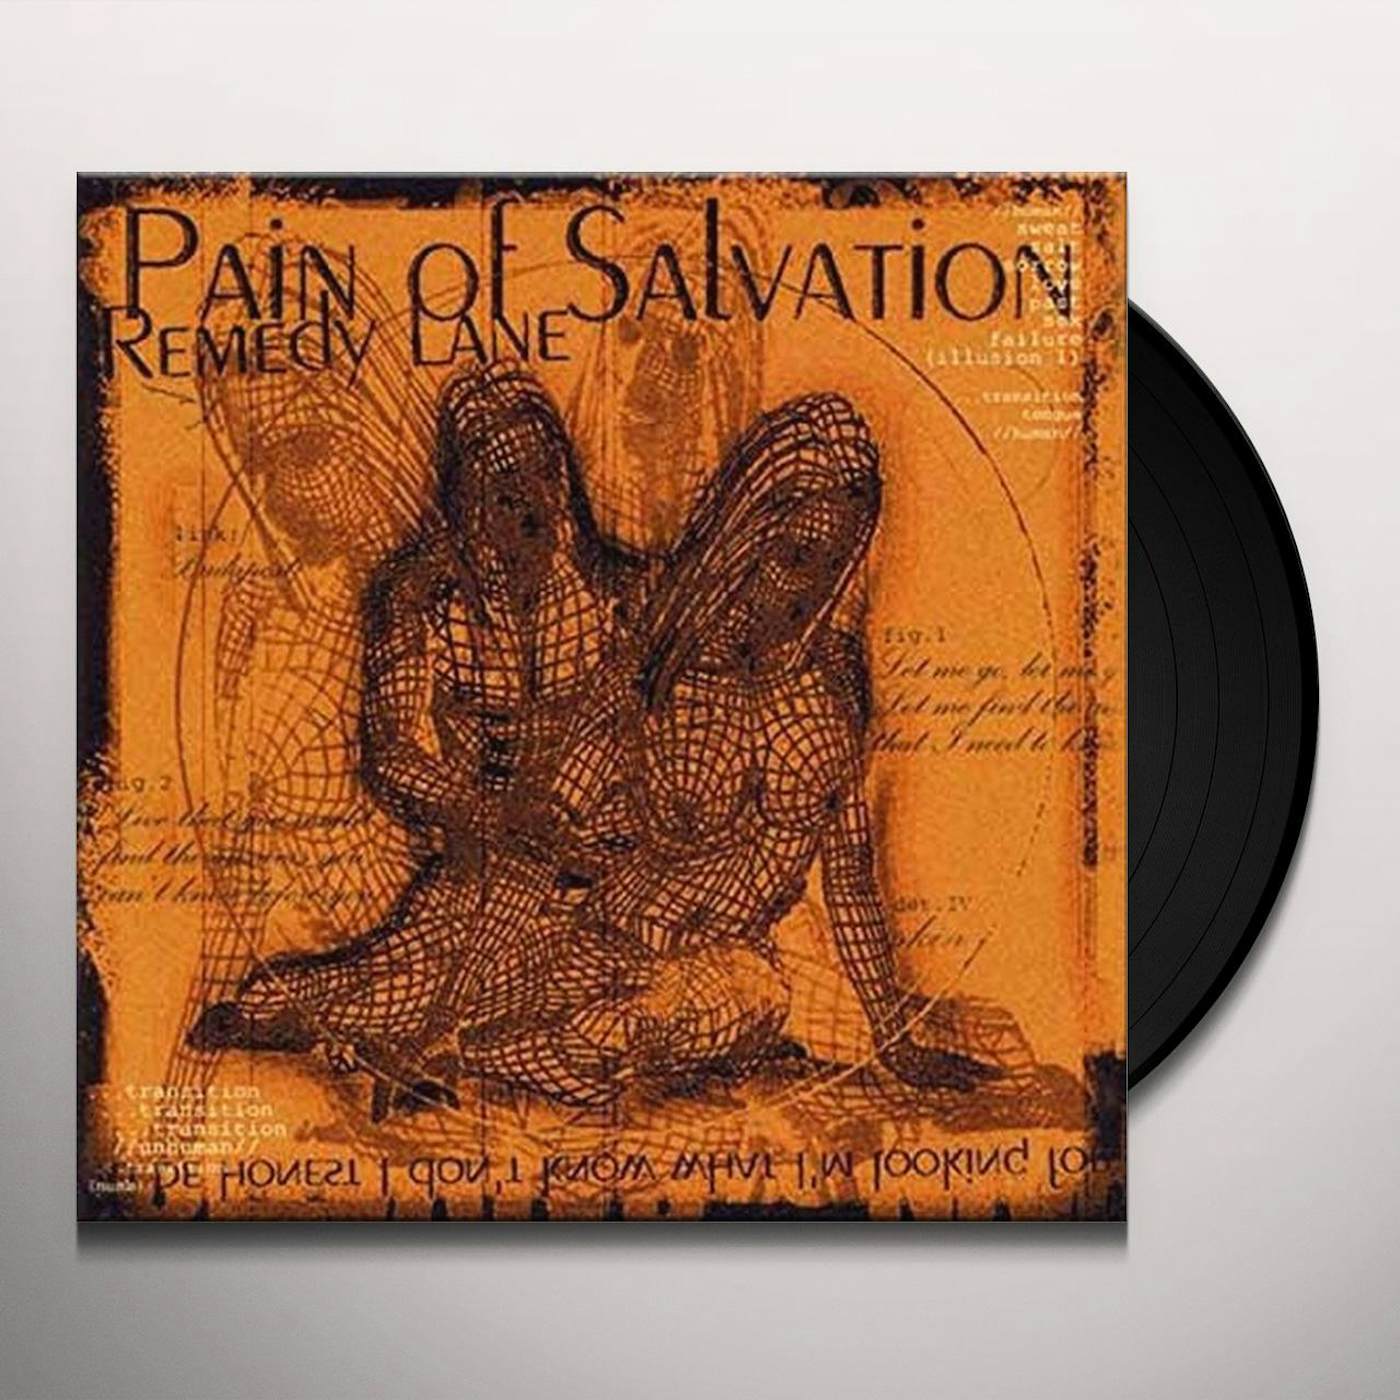 Pain of Salvation REMEMDY LANE Vinyl Record